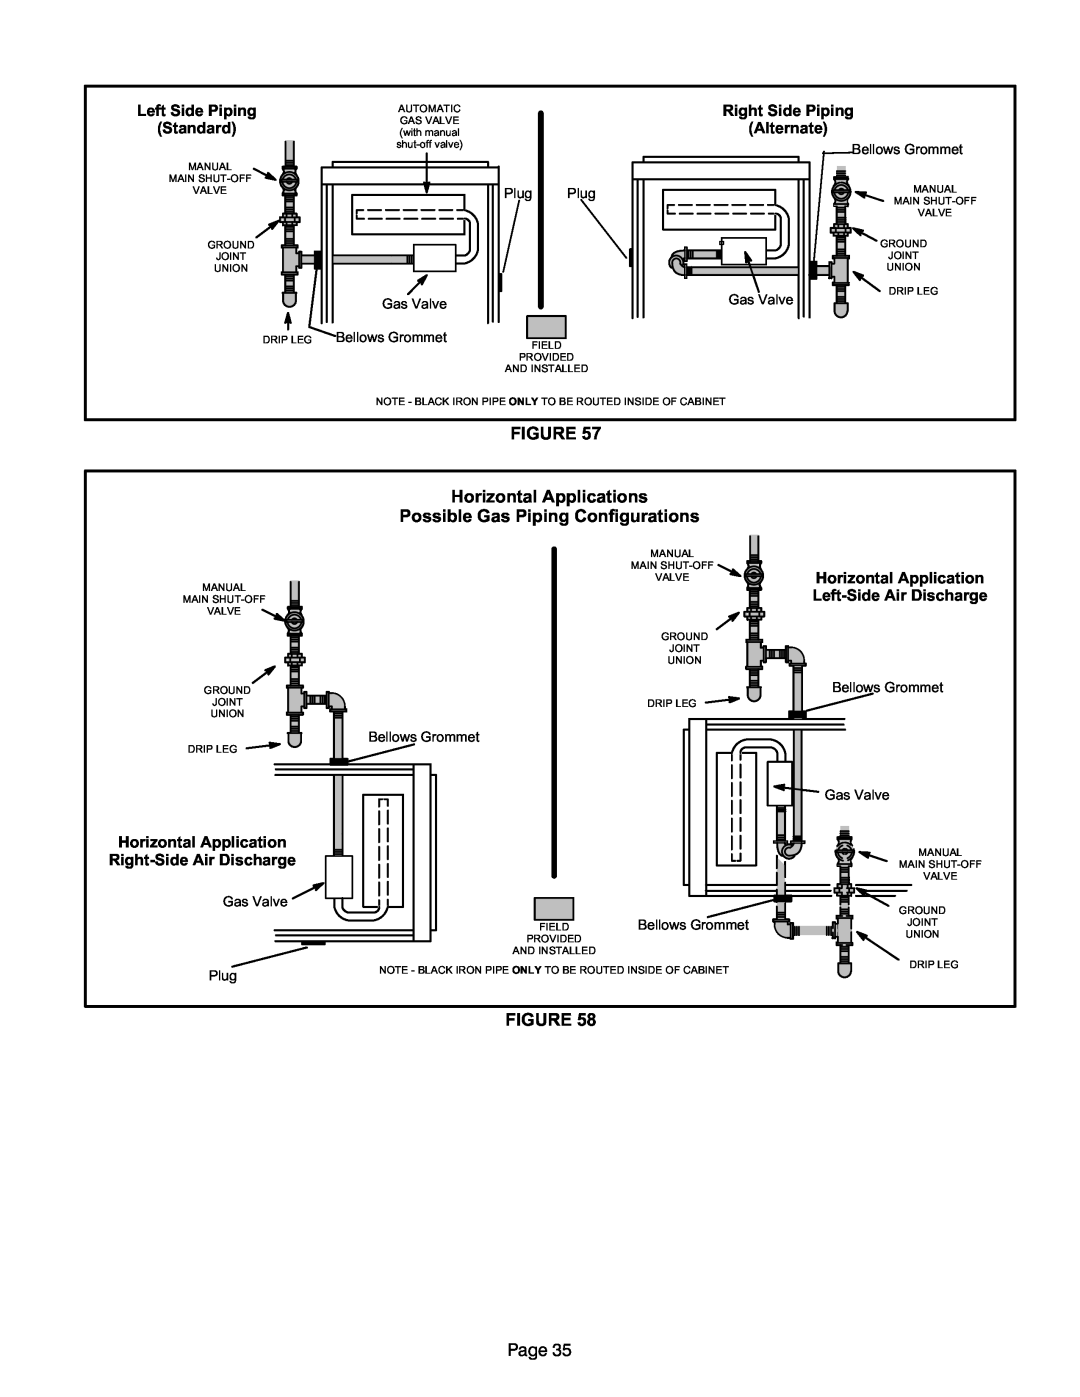 Lennox International Inc Lennox Merit Series Gas Furnace Upflow/Horizontal Air Discharge, ML193UH Horizontal Applications 